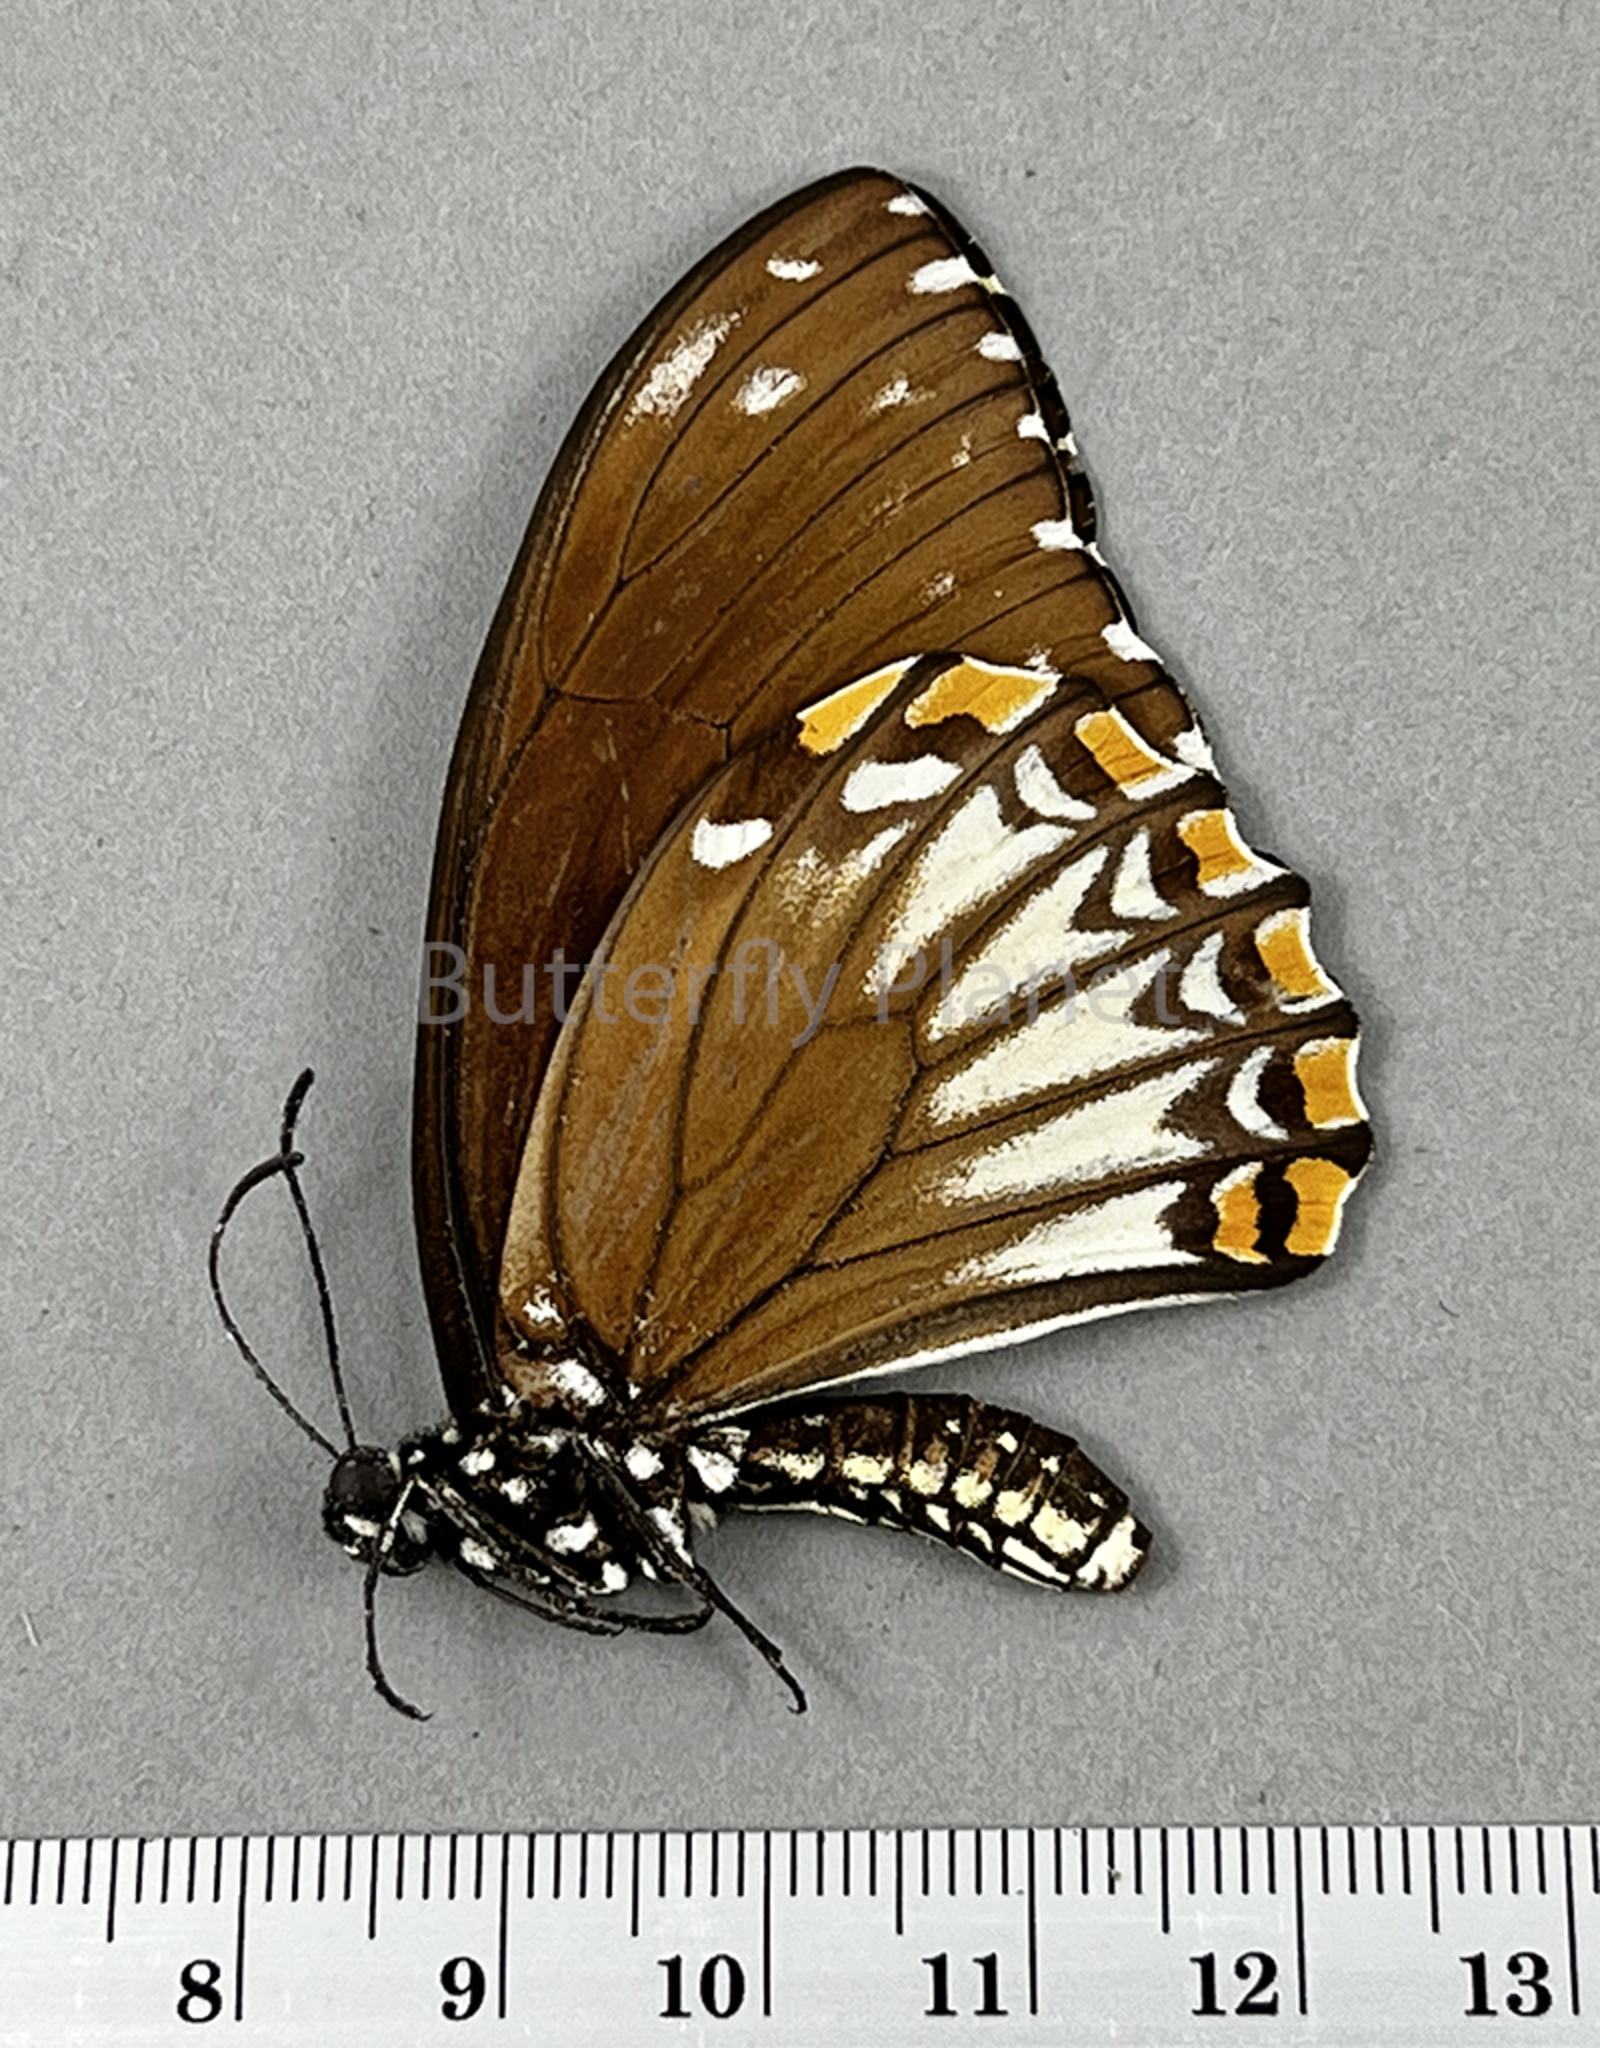 Chilasa clytia lankeswara brown form M A1- Sri Lanka